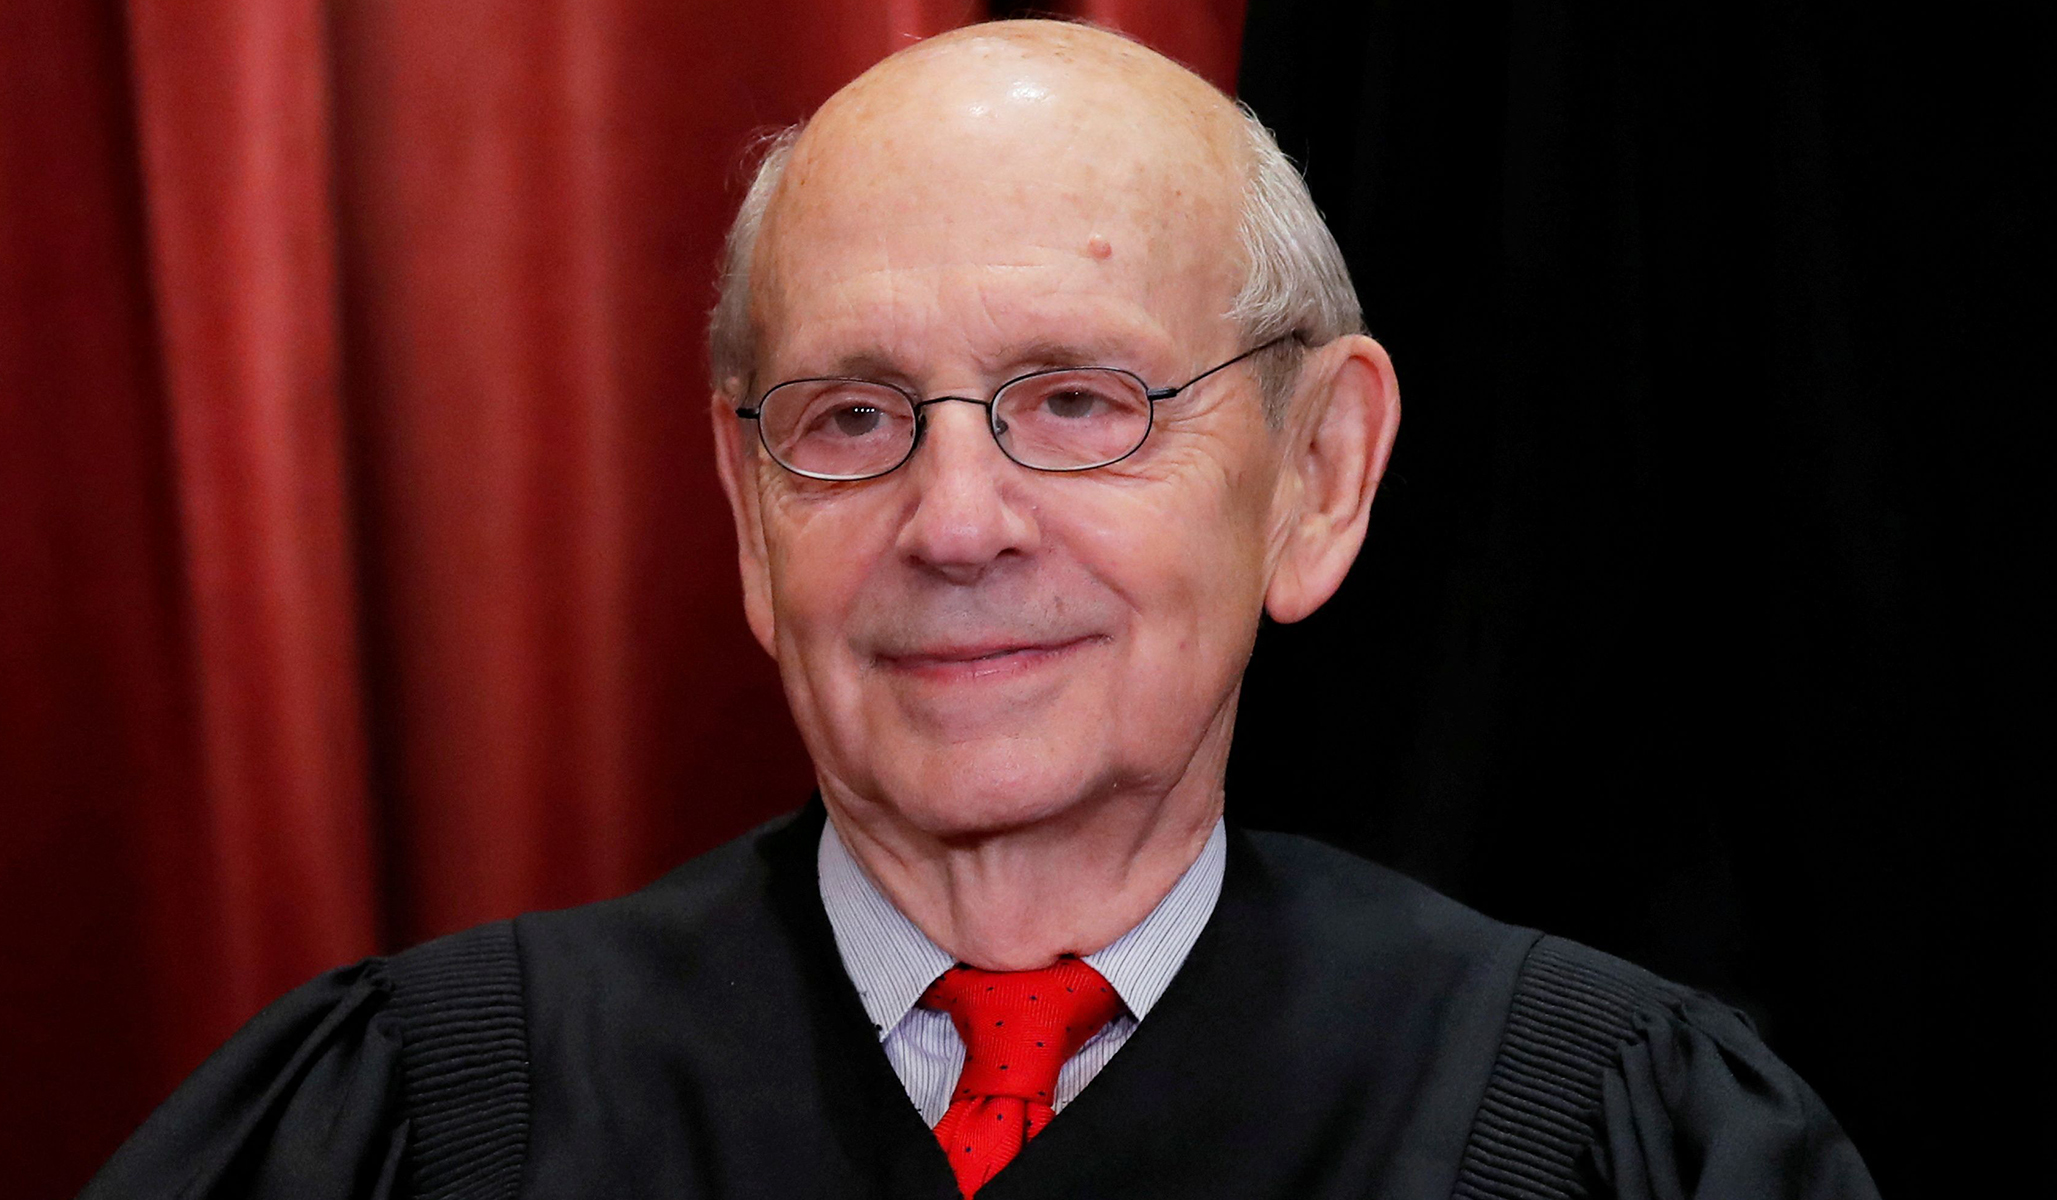 Replacing Justice Breyer